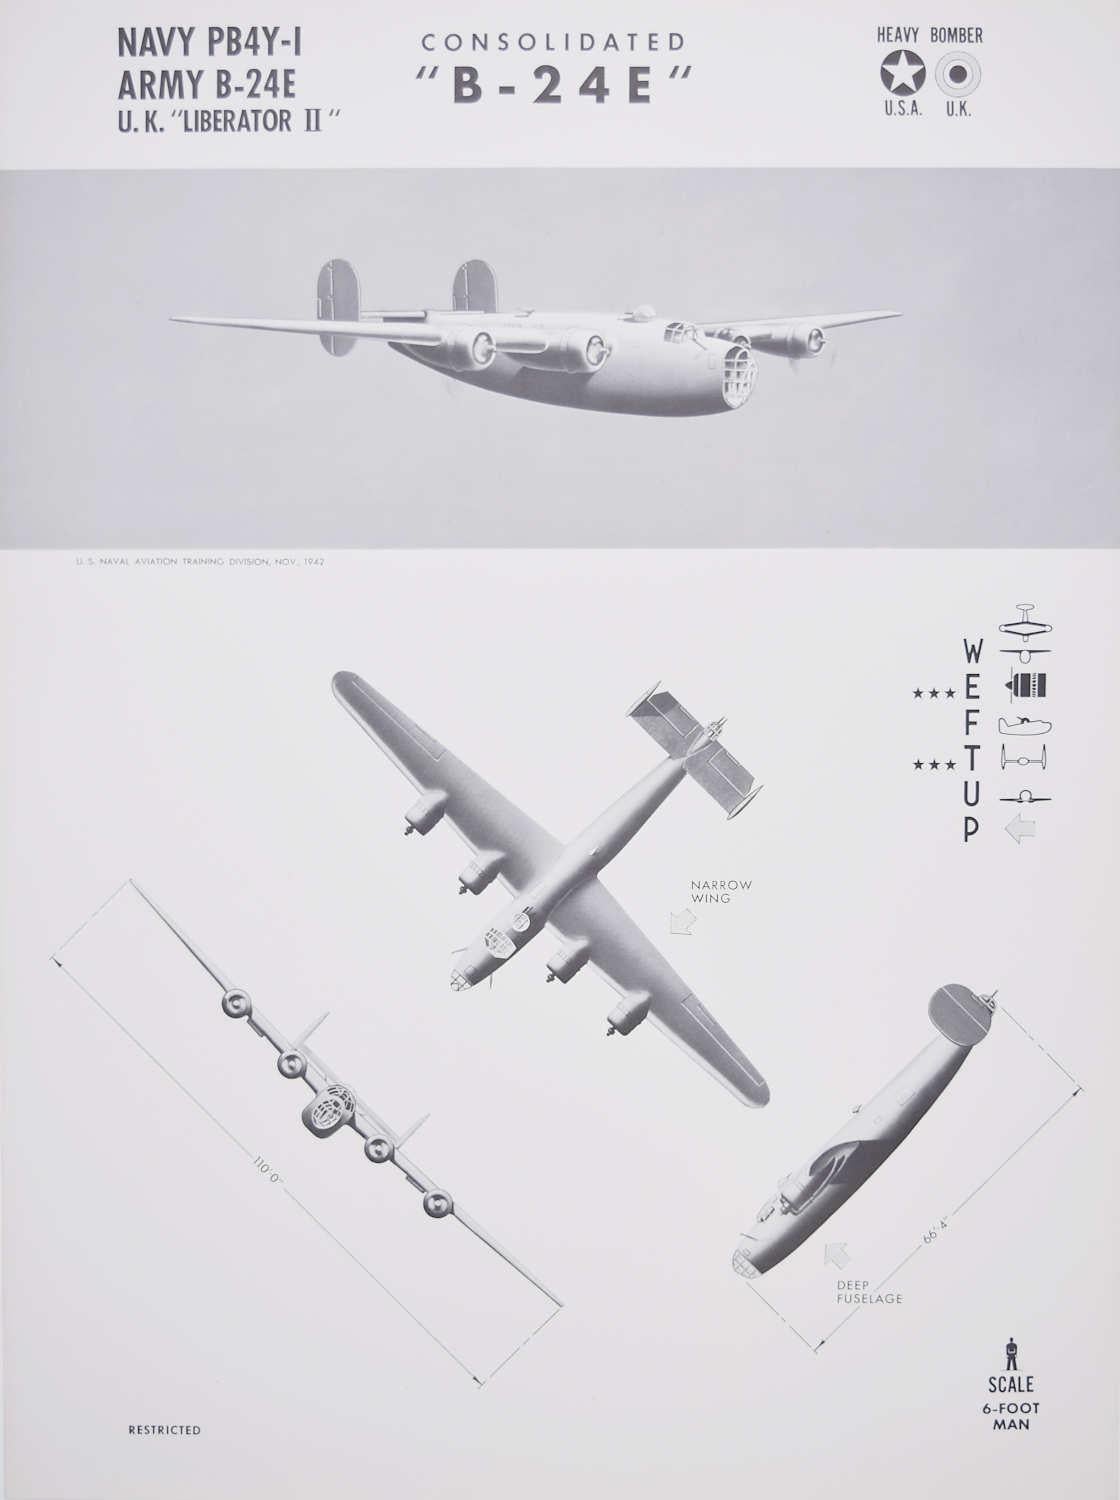 1942 "B24 E" "Liberator II" heavy bomber aeroplane identification poster WW2 - Print by Unknown